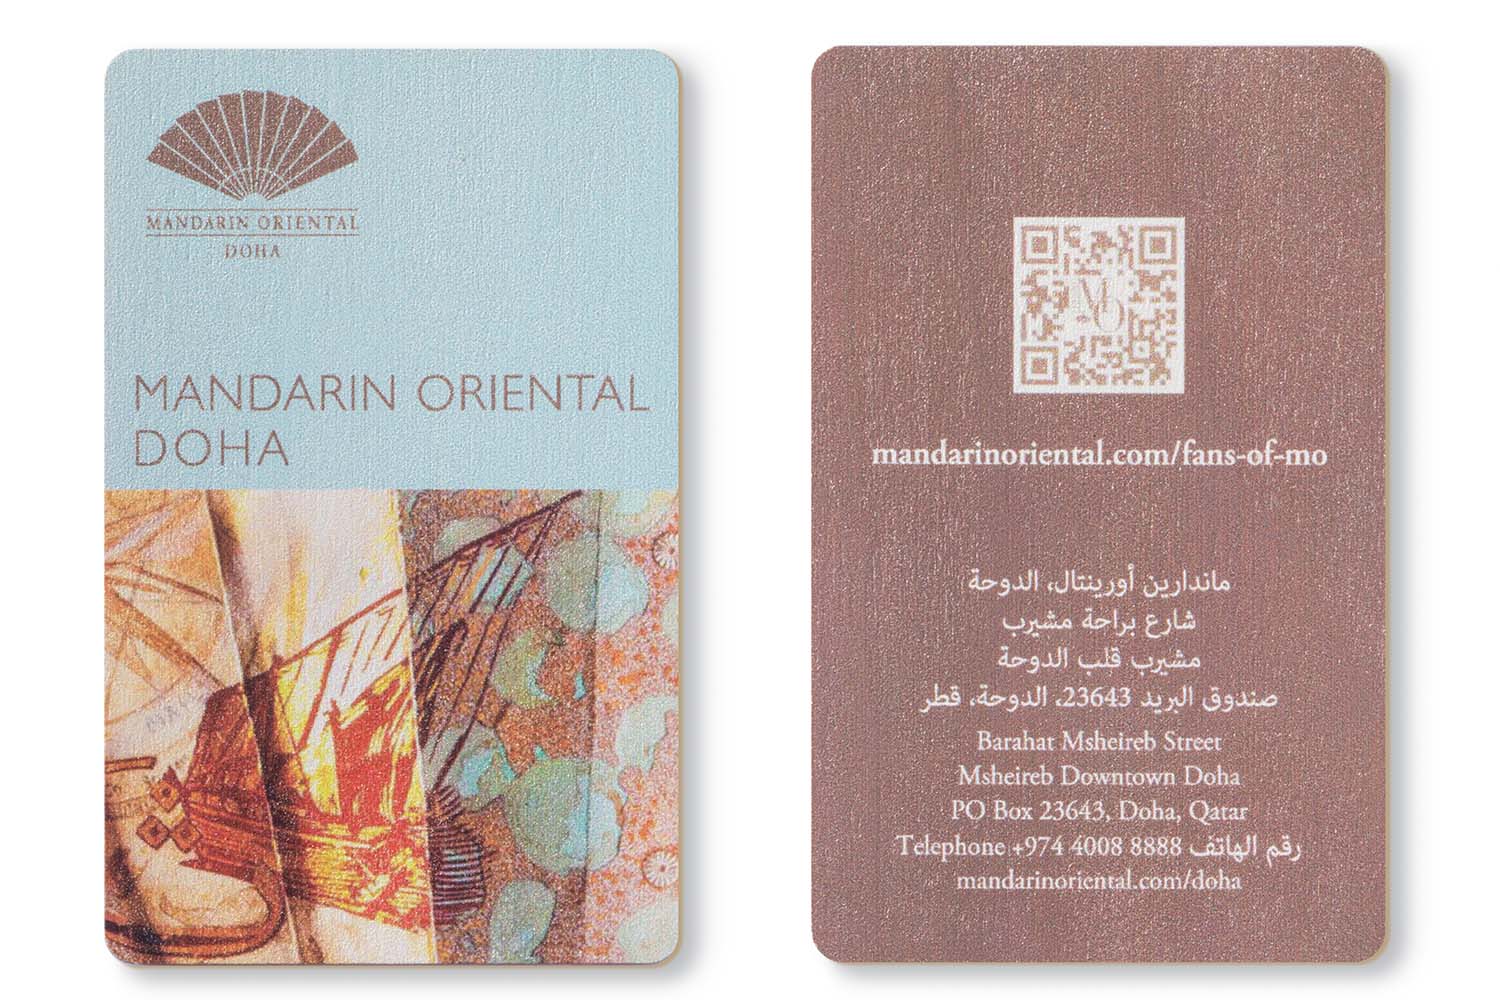 The new Mandarin Oriental key card